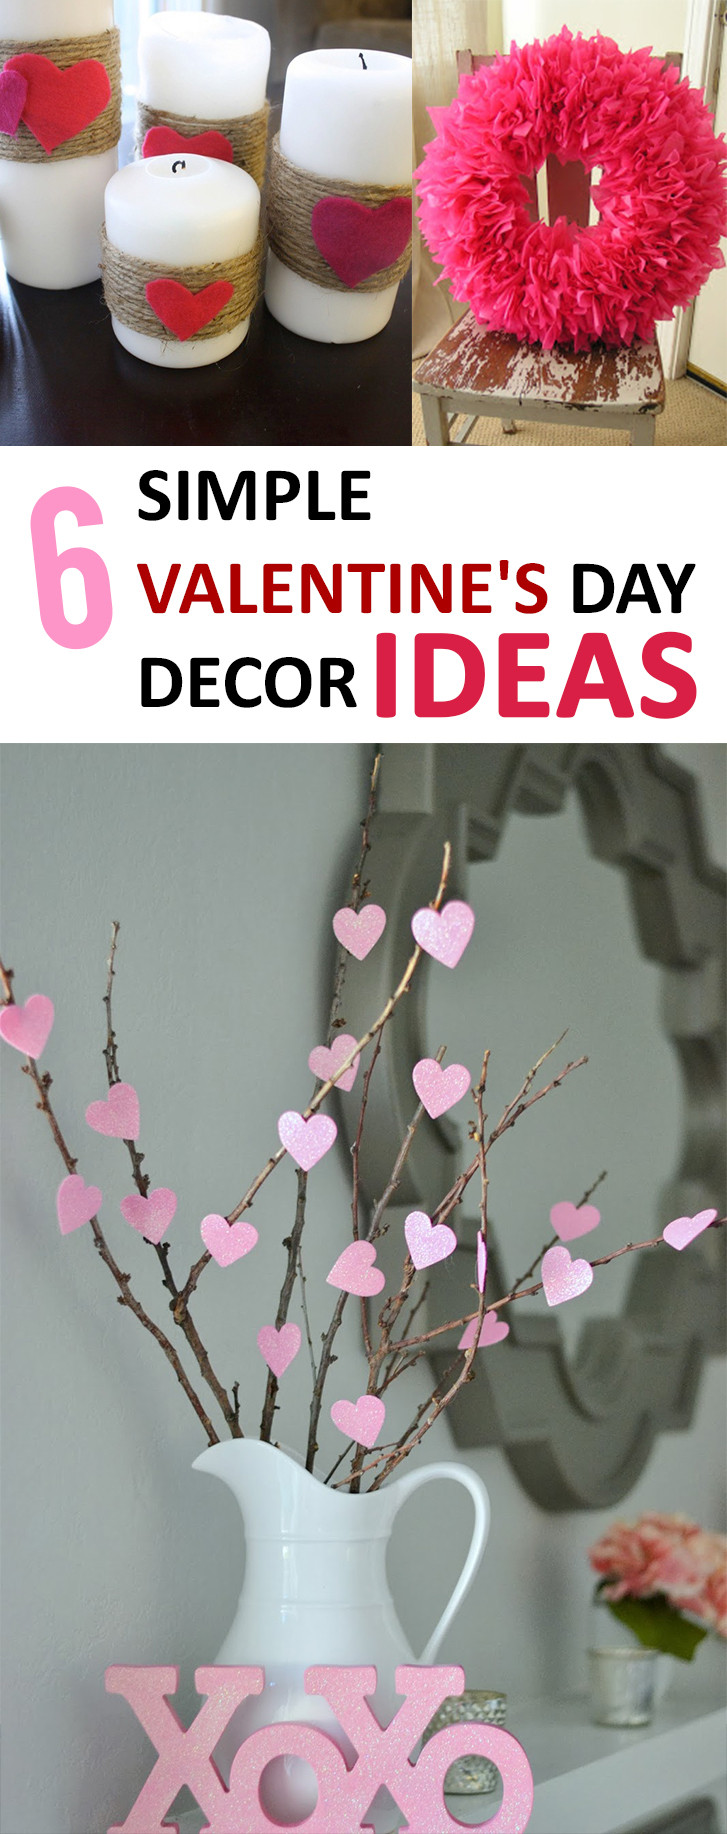 Valentines Day Decor Ideas
 6 Simple Valentine’s Day Décor Ideas